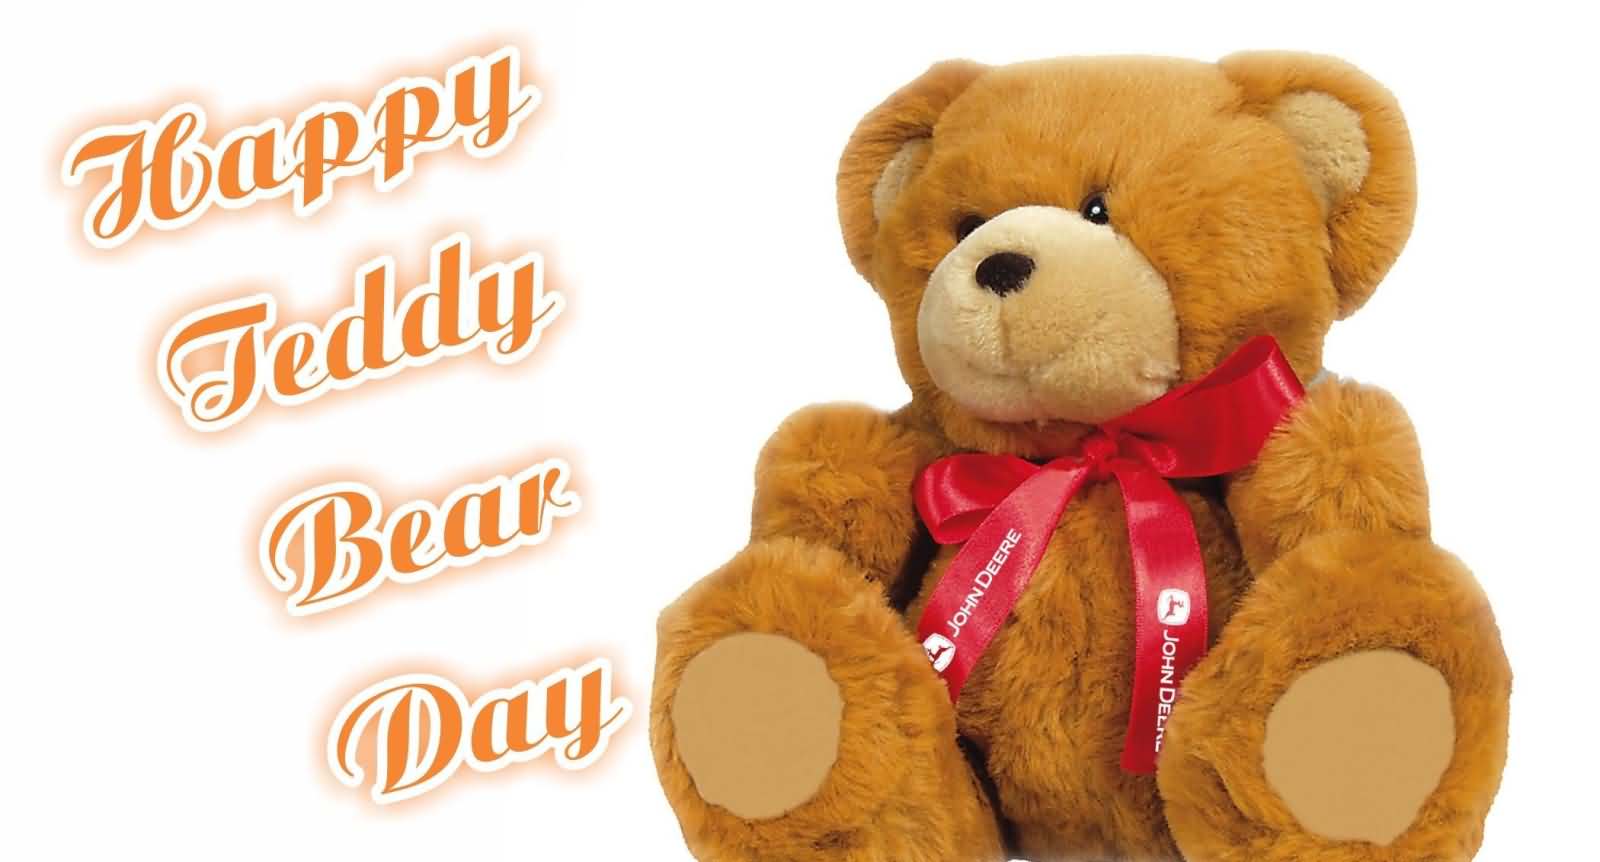 happy teddy bear day cute teddy bear with red ribbon in neck